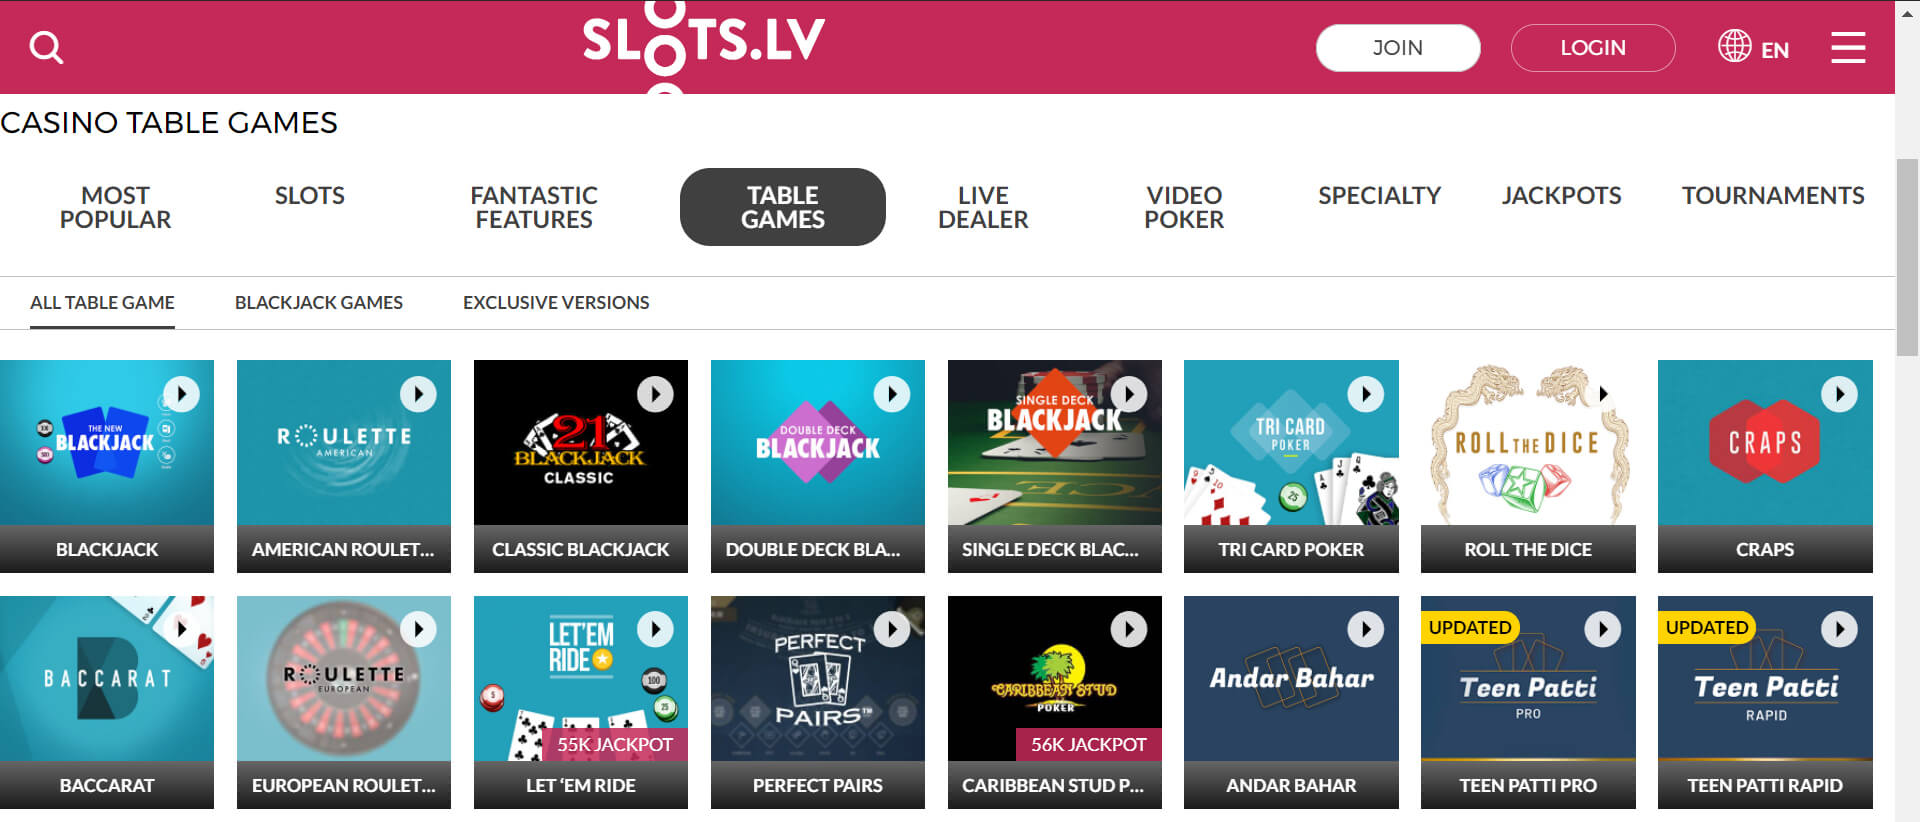 Slots.lv Table Games Section Screenshot